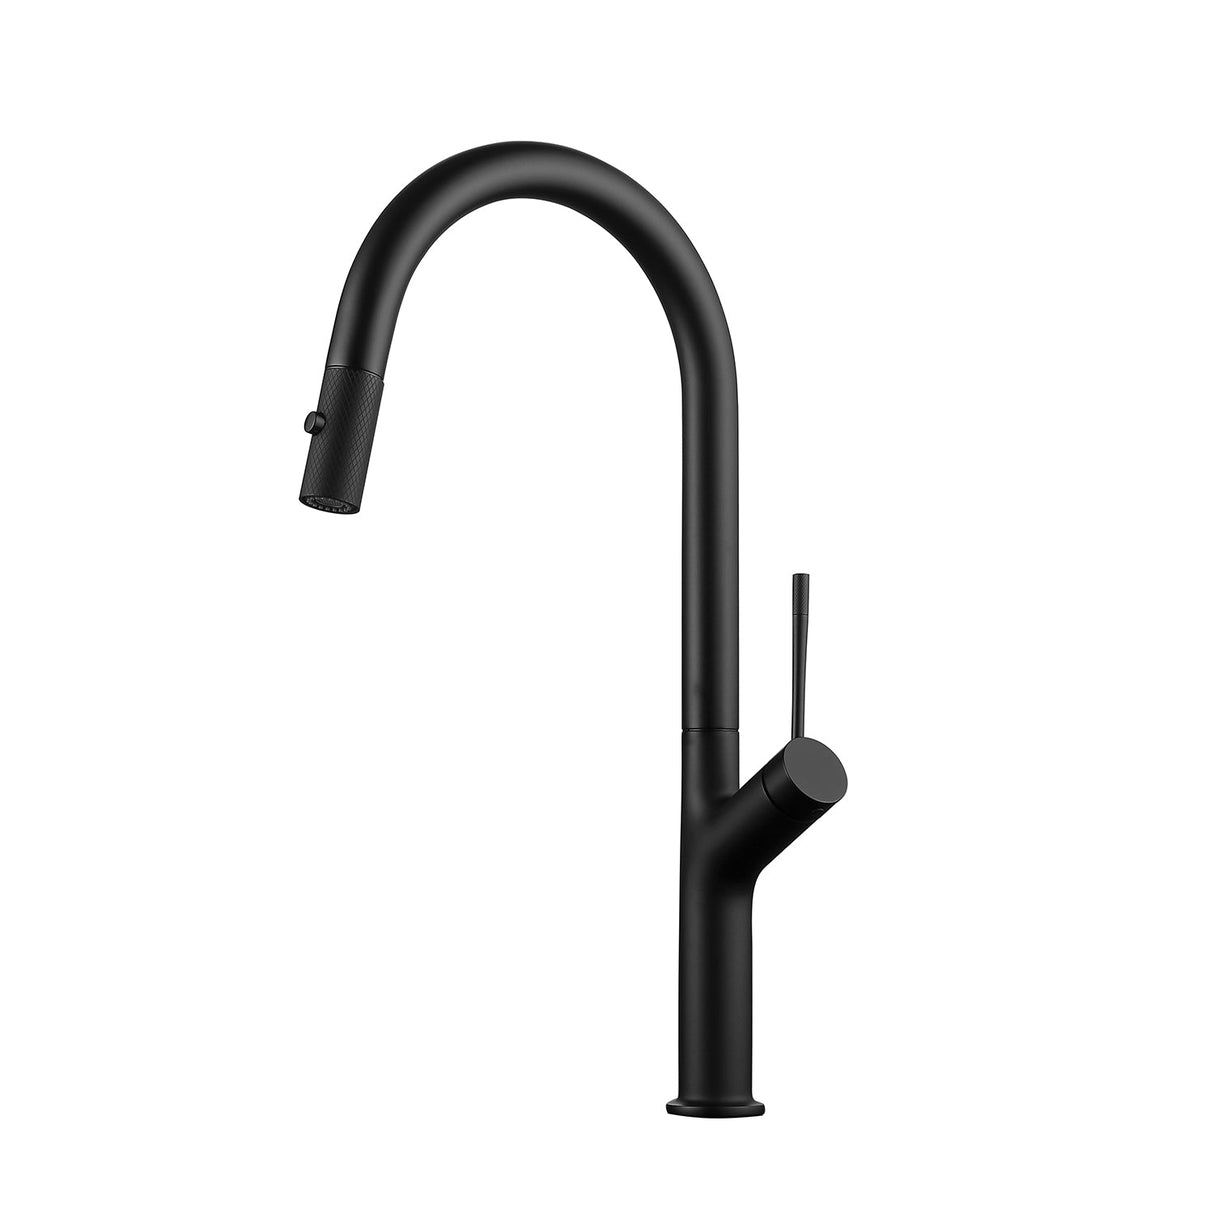 DAX Brass Single Handle Pull Out Kitchen Faucet, Matt Black DAX-8020011-BL